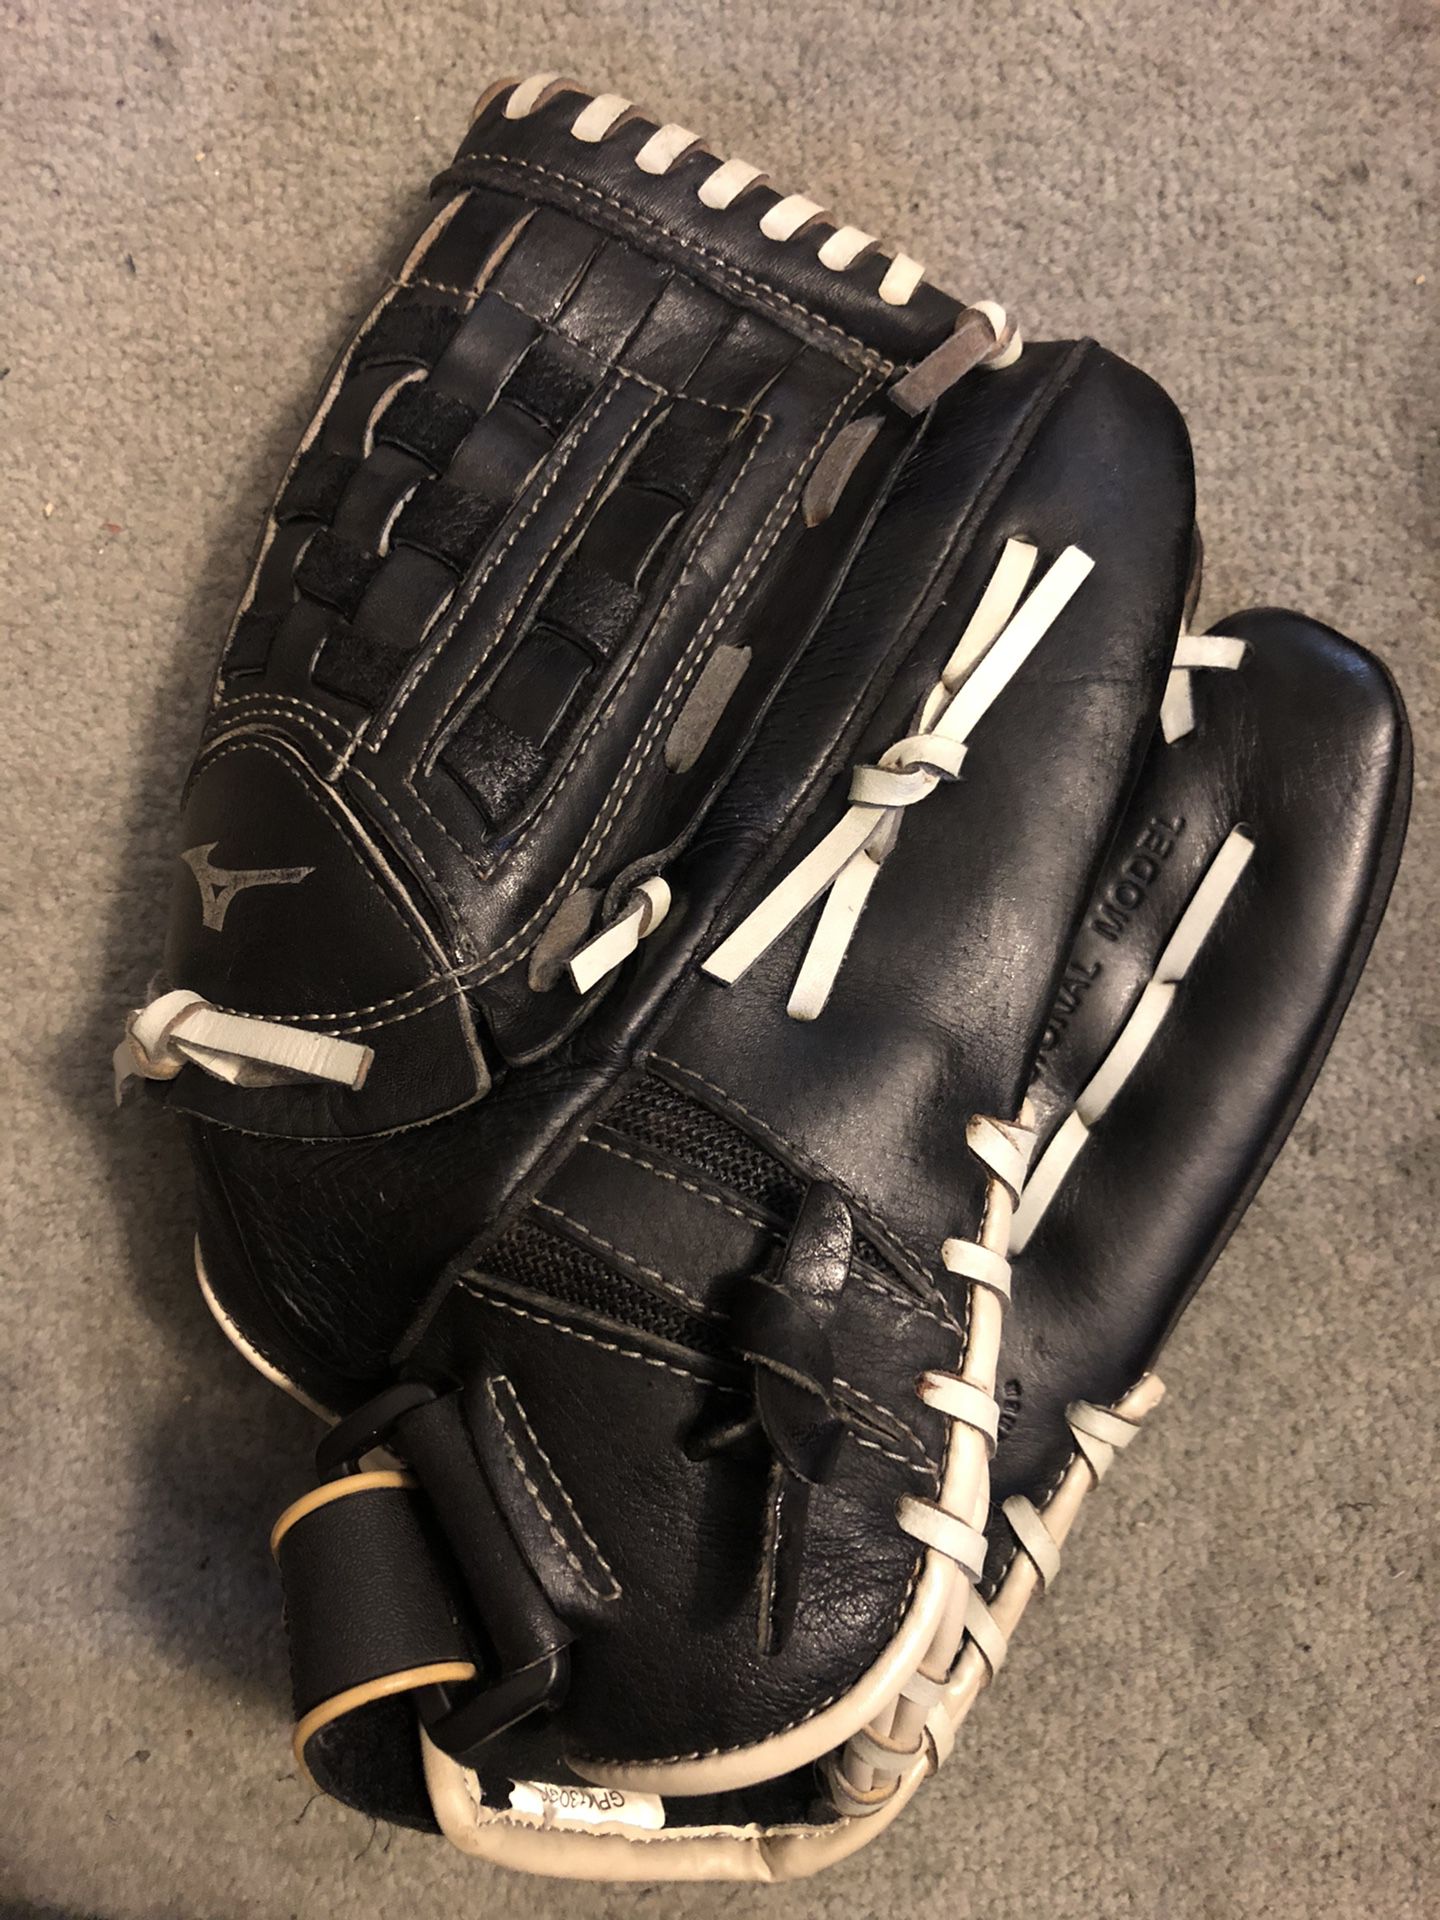 Mizuno Premier Softball Glove